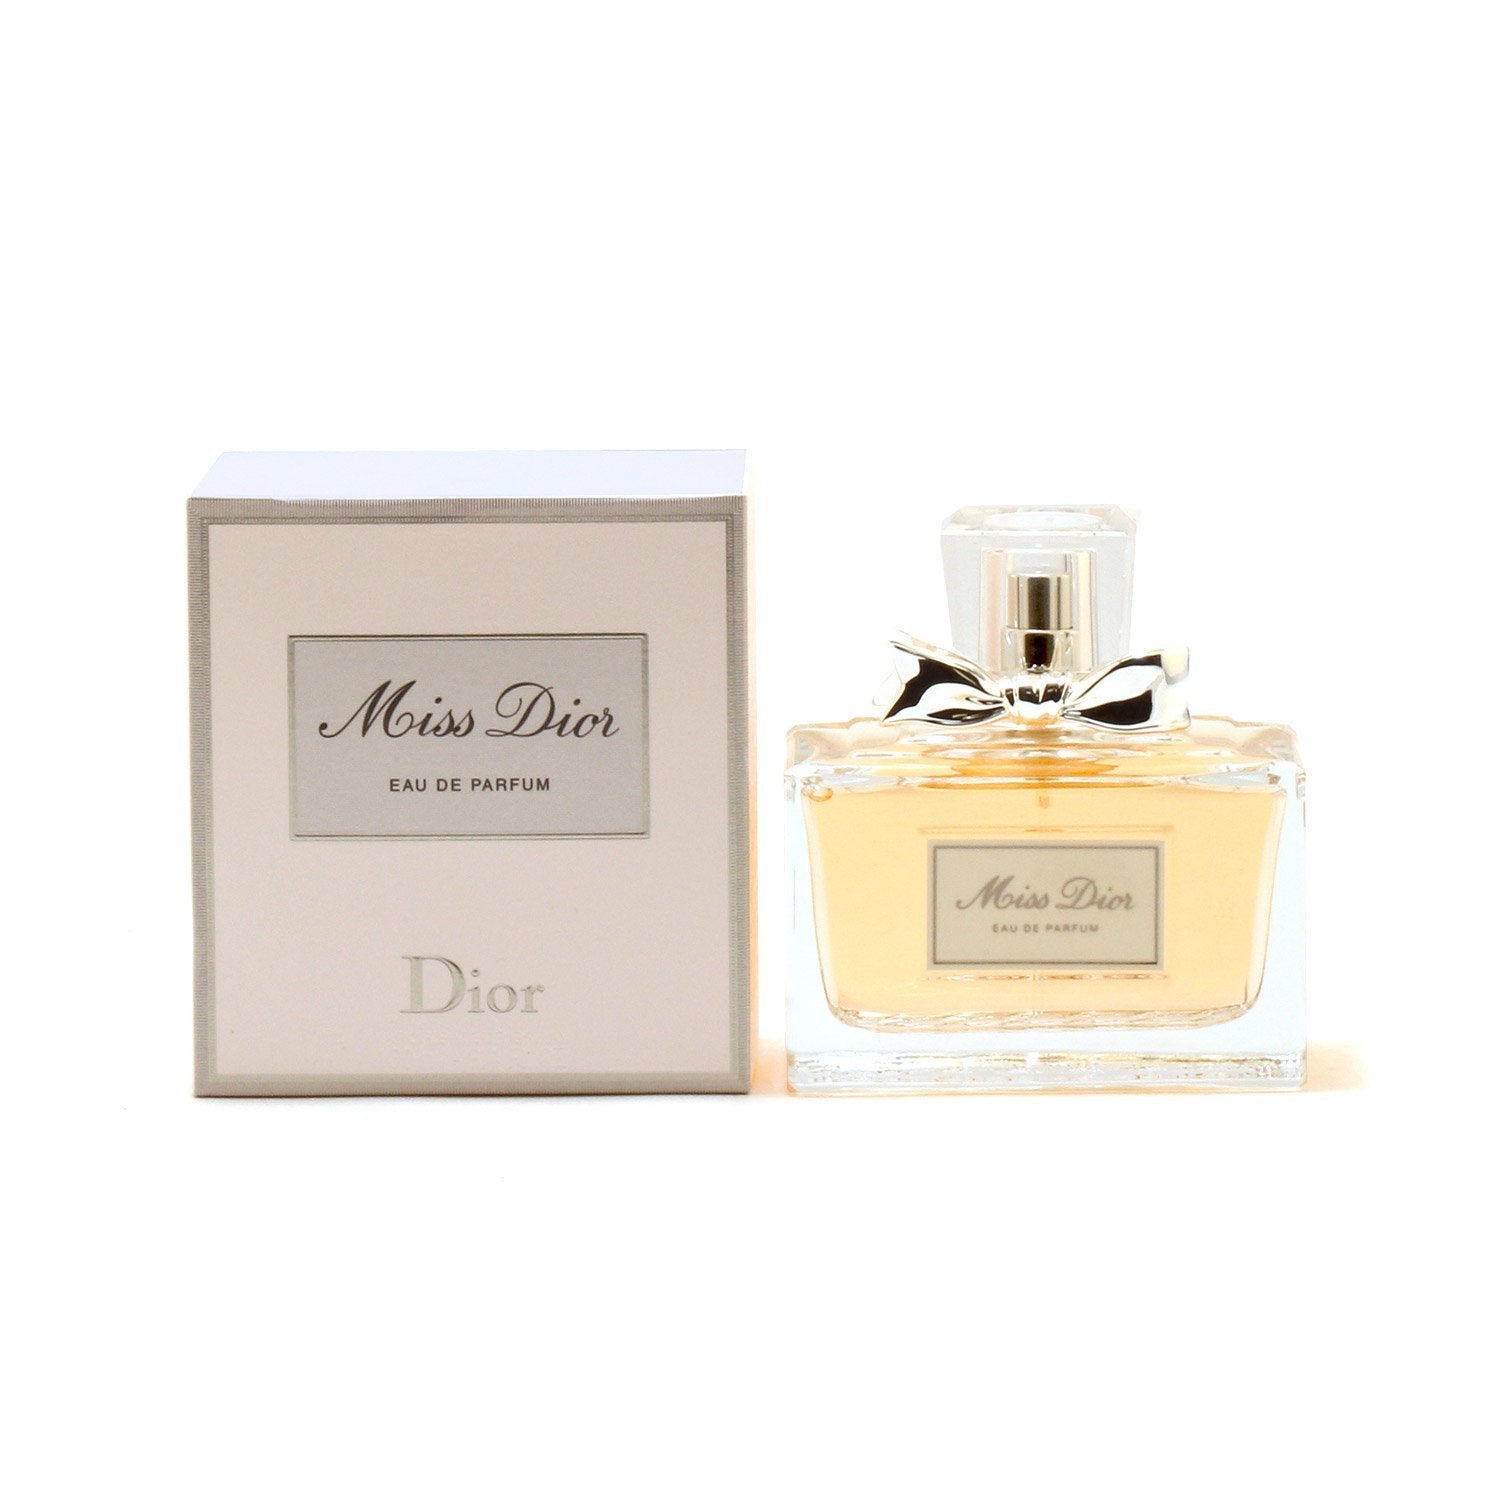 Miss Dior (cherie) by Christian Dior , EDT Spray Vial on Card